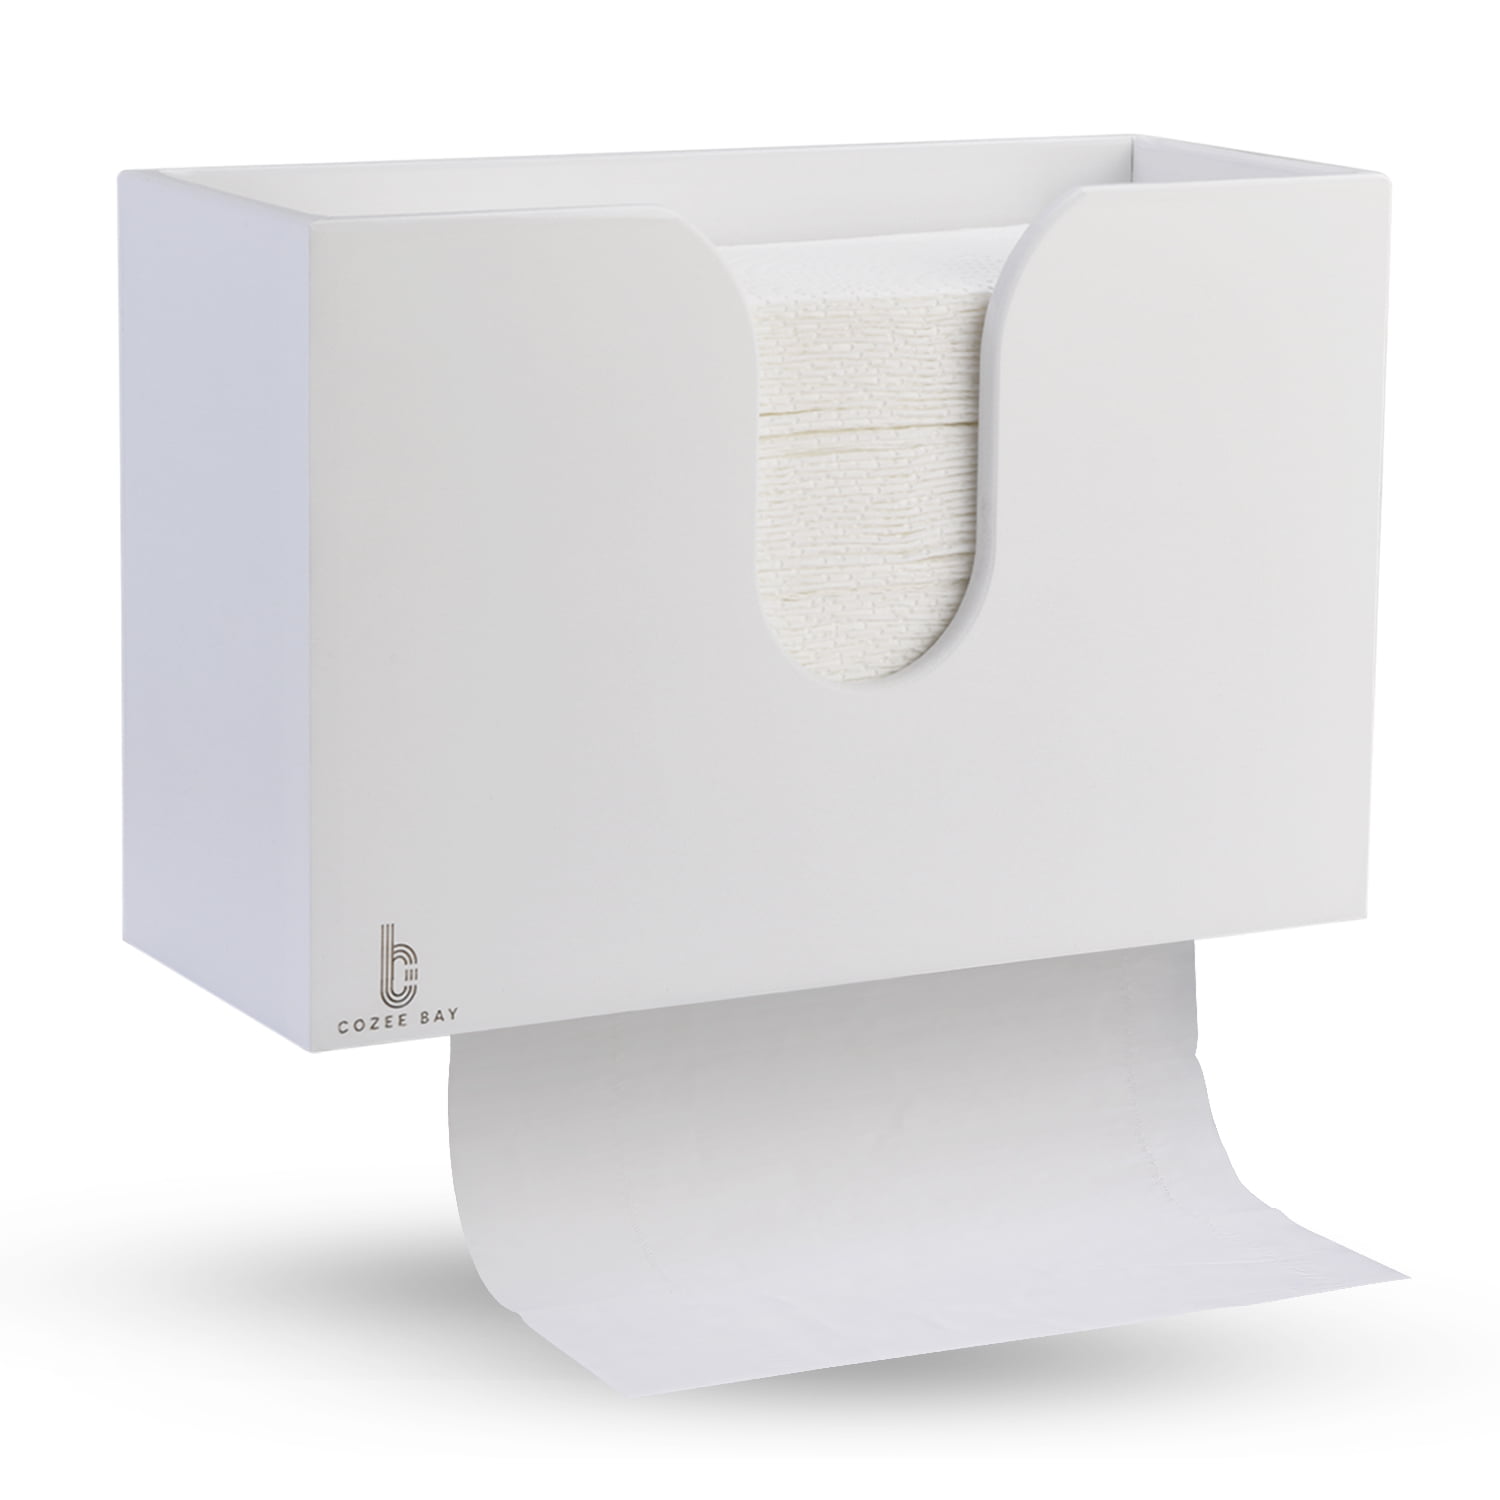 Waterproof Multifold Paper Towel Dispenser 10.6 x 11.1 x 5.1,Black Interhasa Commercial Paper Towel Dispenser Wall Mount